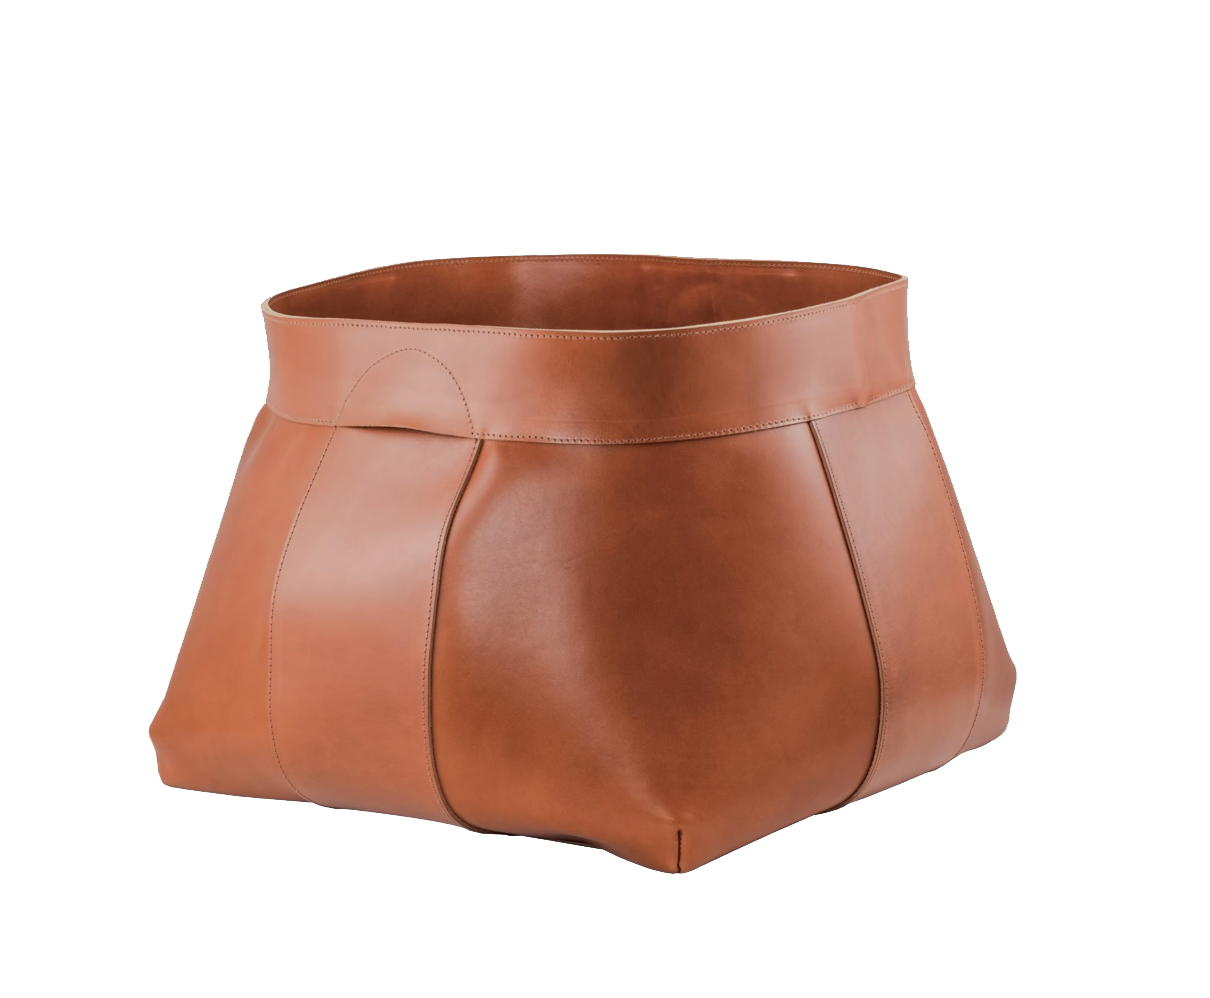 Brown Palu Low Woven Leather Basket by Rabitti 1969